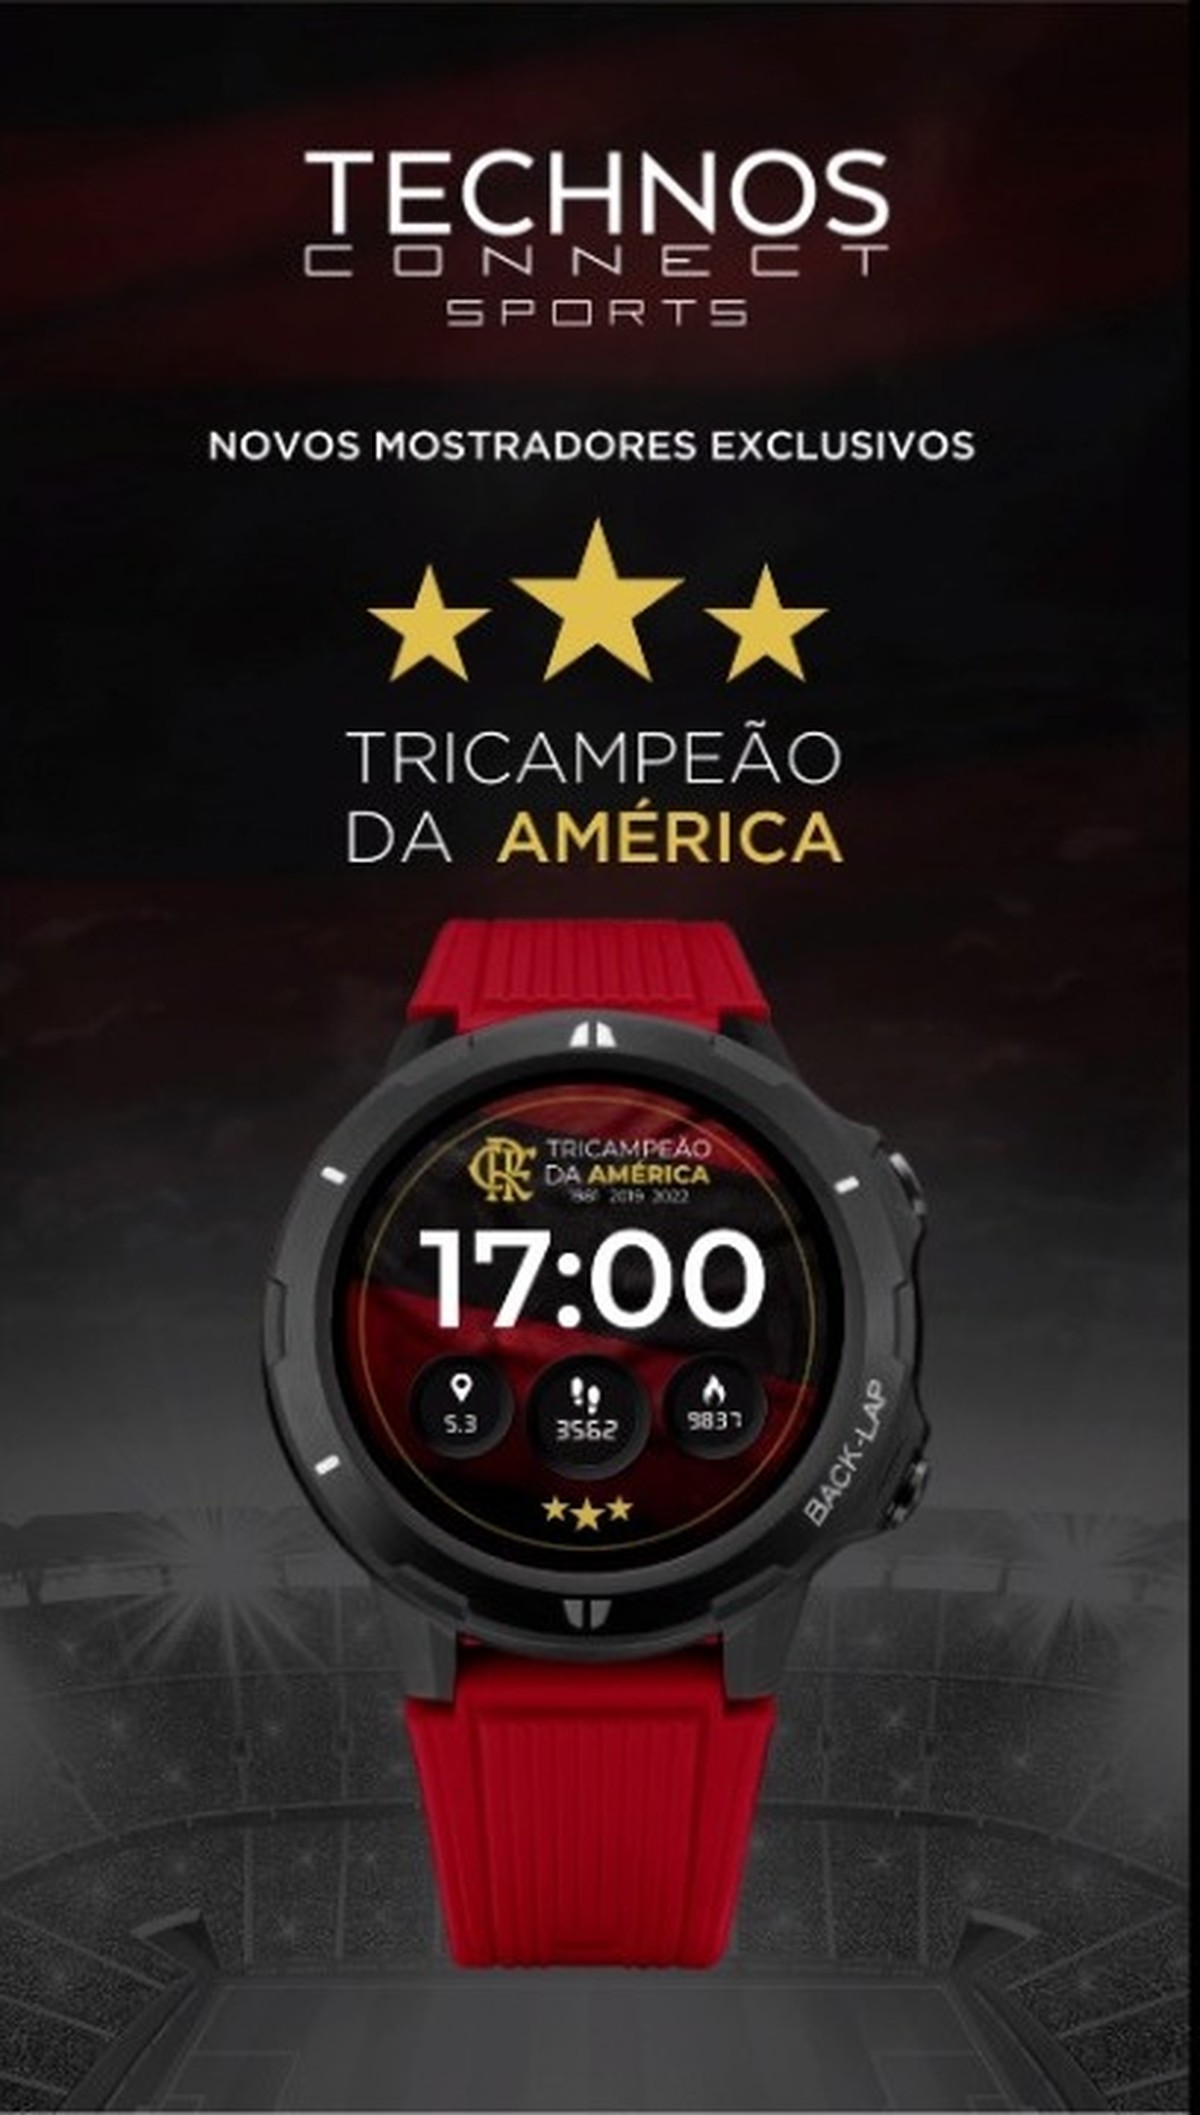 Smartwatch Flamengo Technos Connect Sports - flamengo